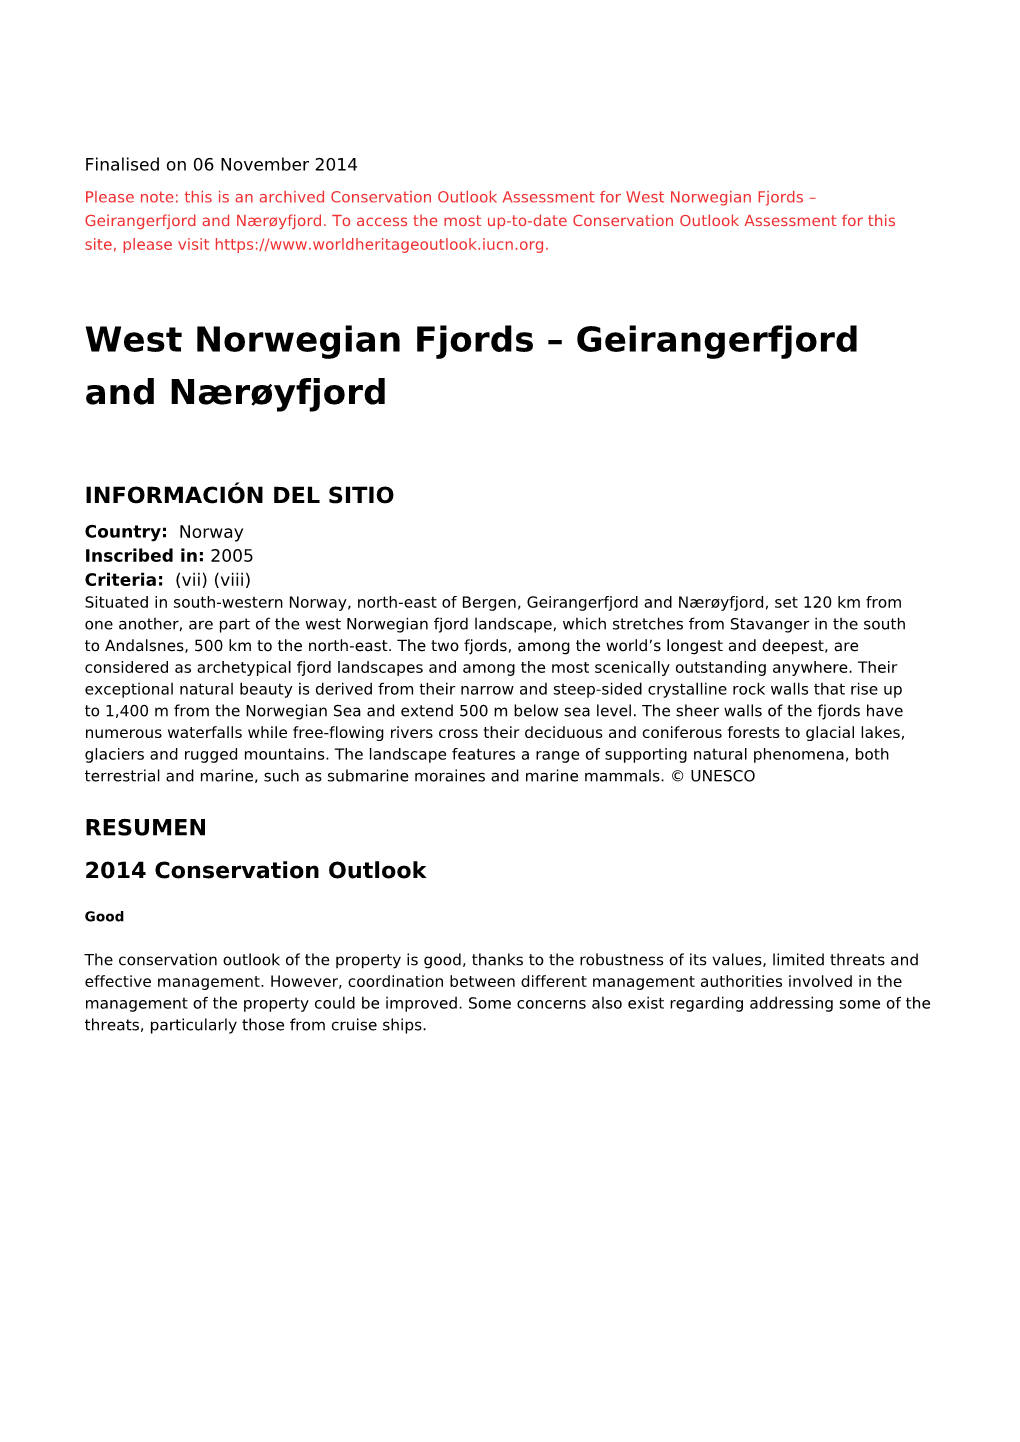 West Norwegian Fjords – Geirangerfjord and Nærøyfjord - 2014 Conservation Outlook Assessment (Archived)